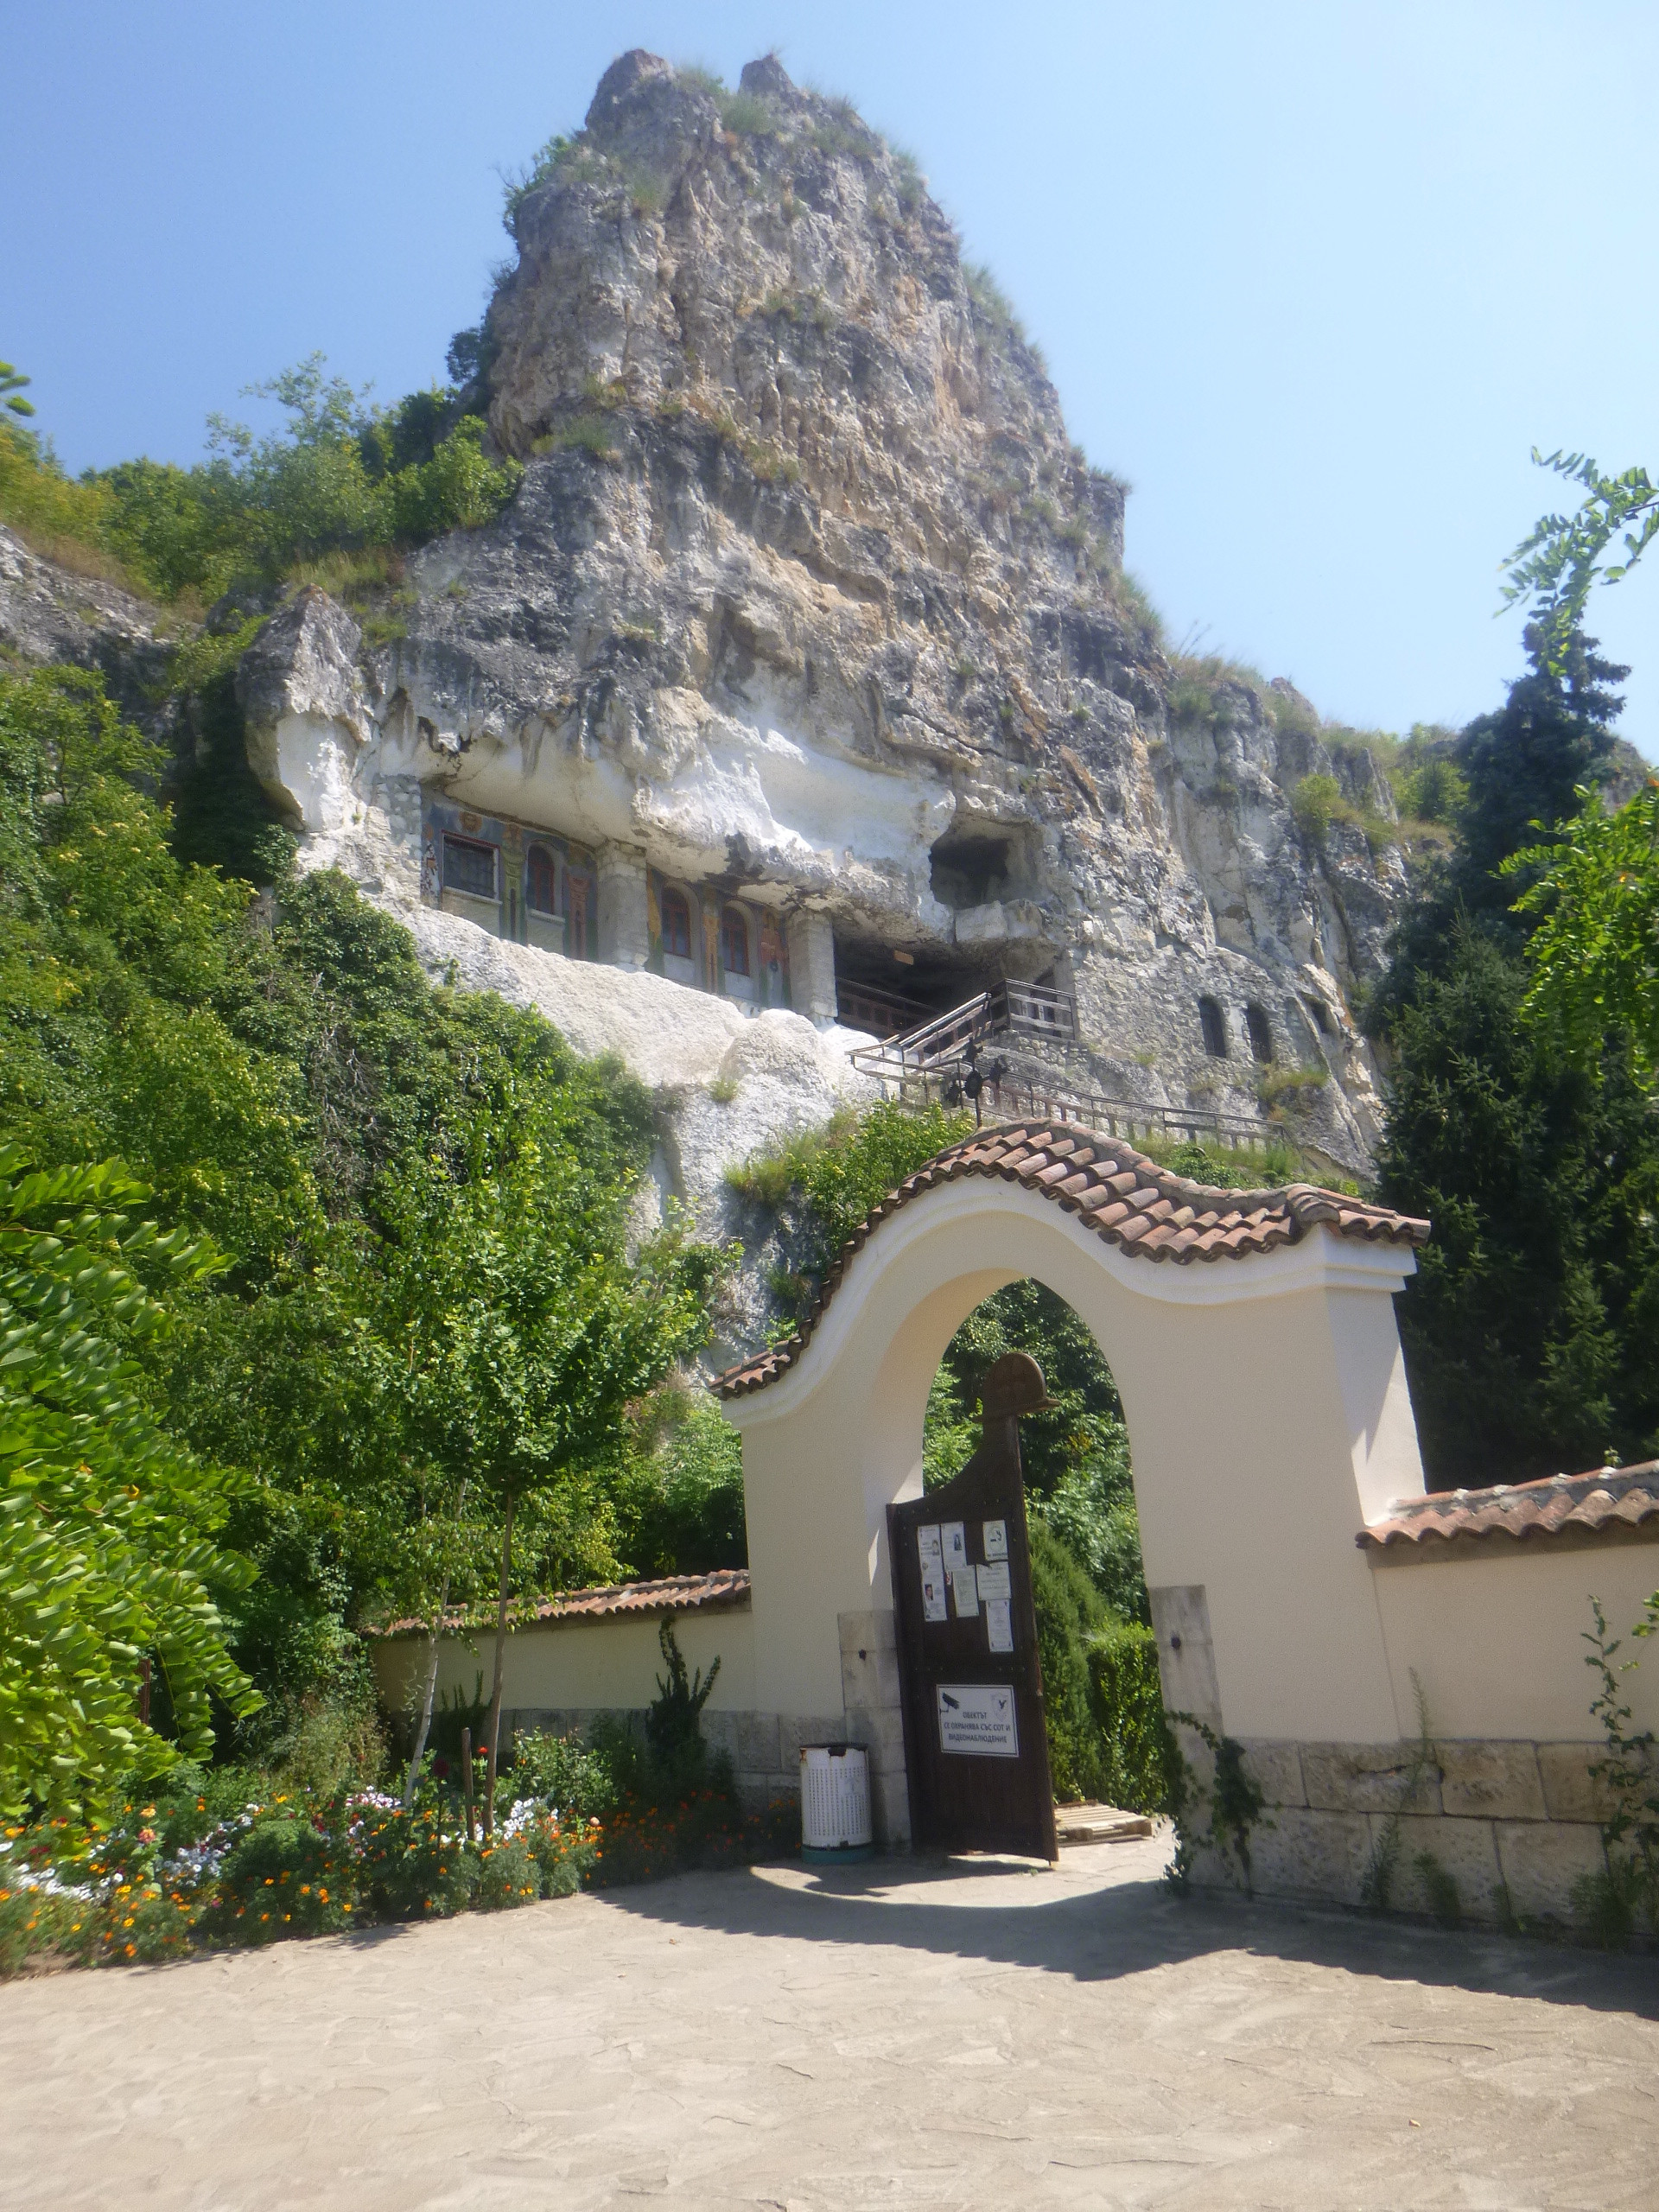 Entrance to Monastery